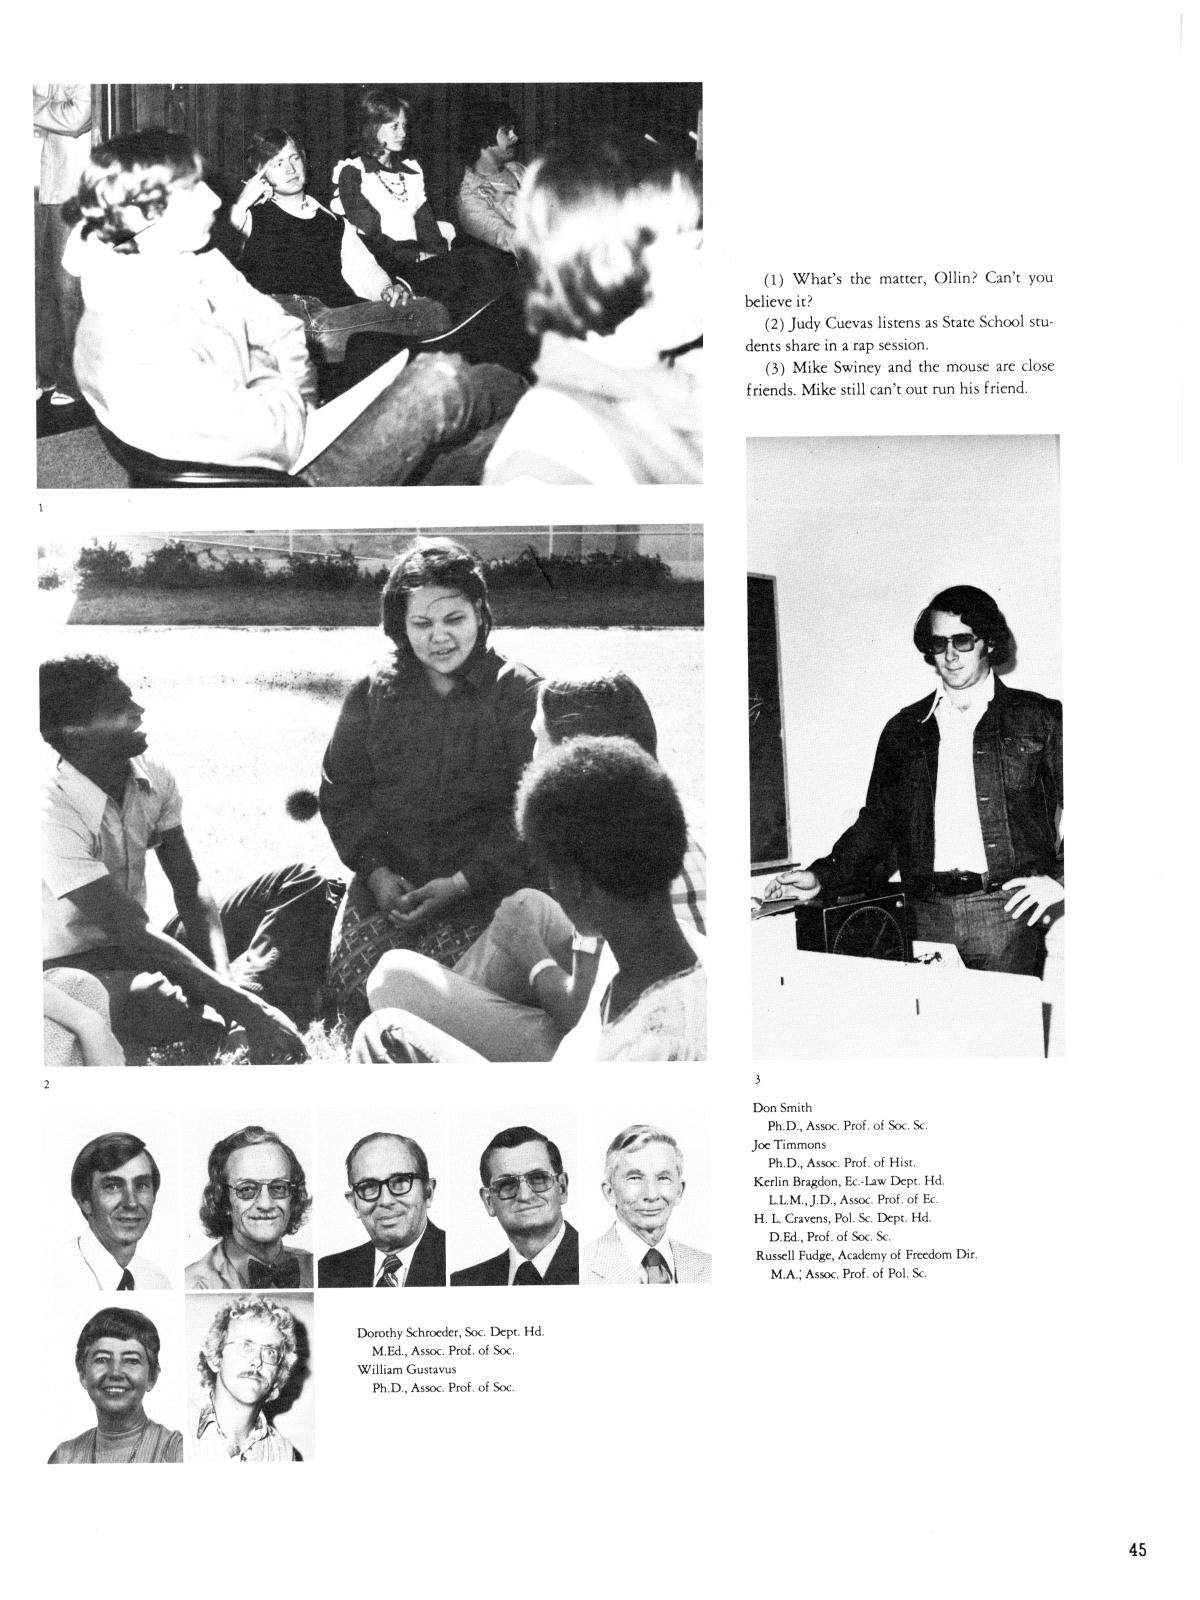 The Lasso, Yearbook of Howard Payne University, 1976
                                                
                                                    45
                                                